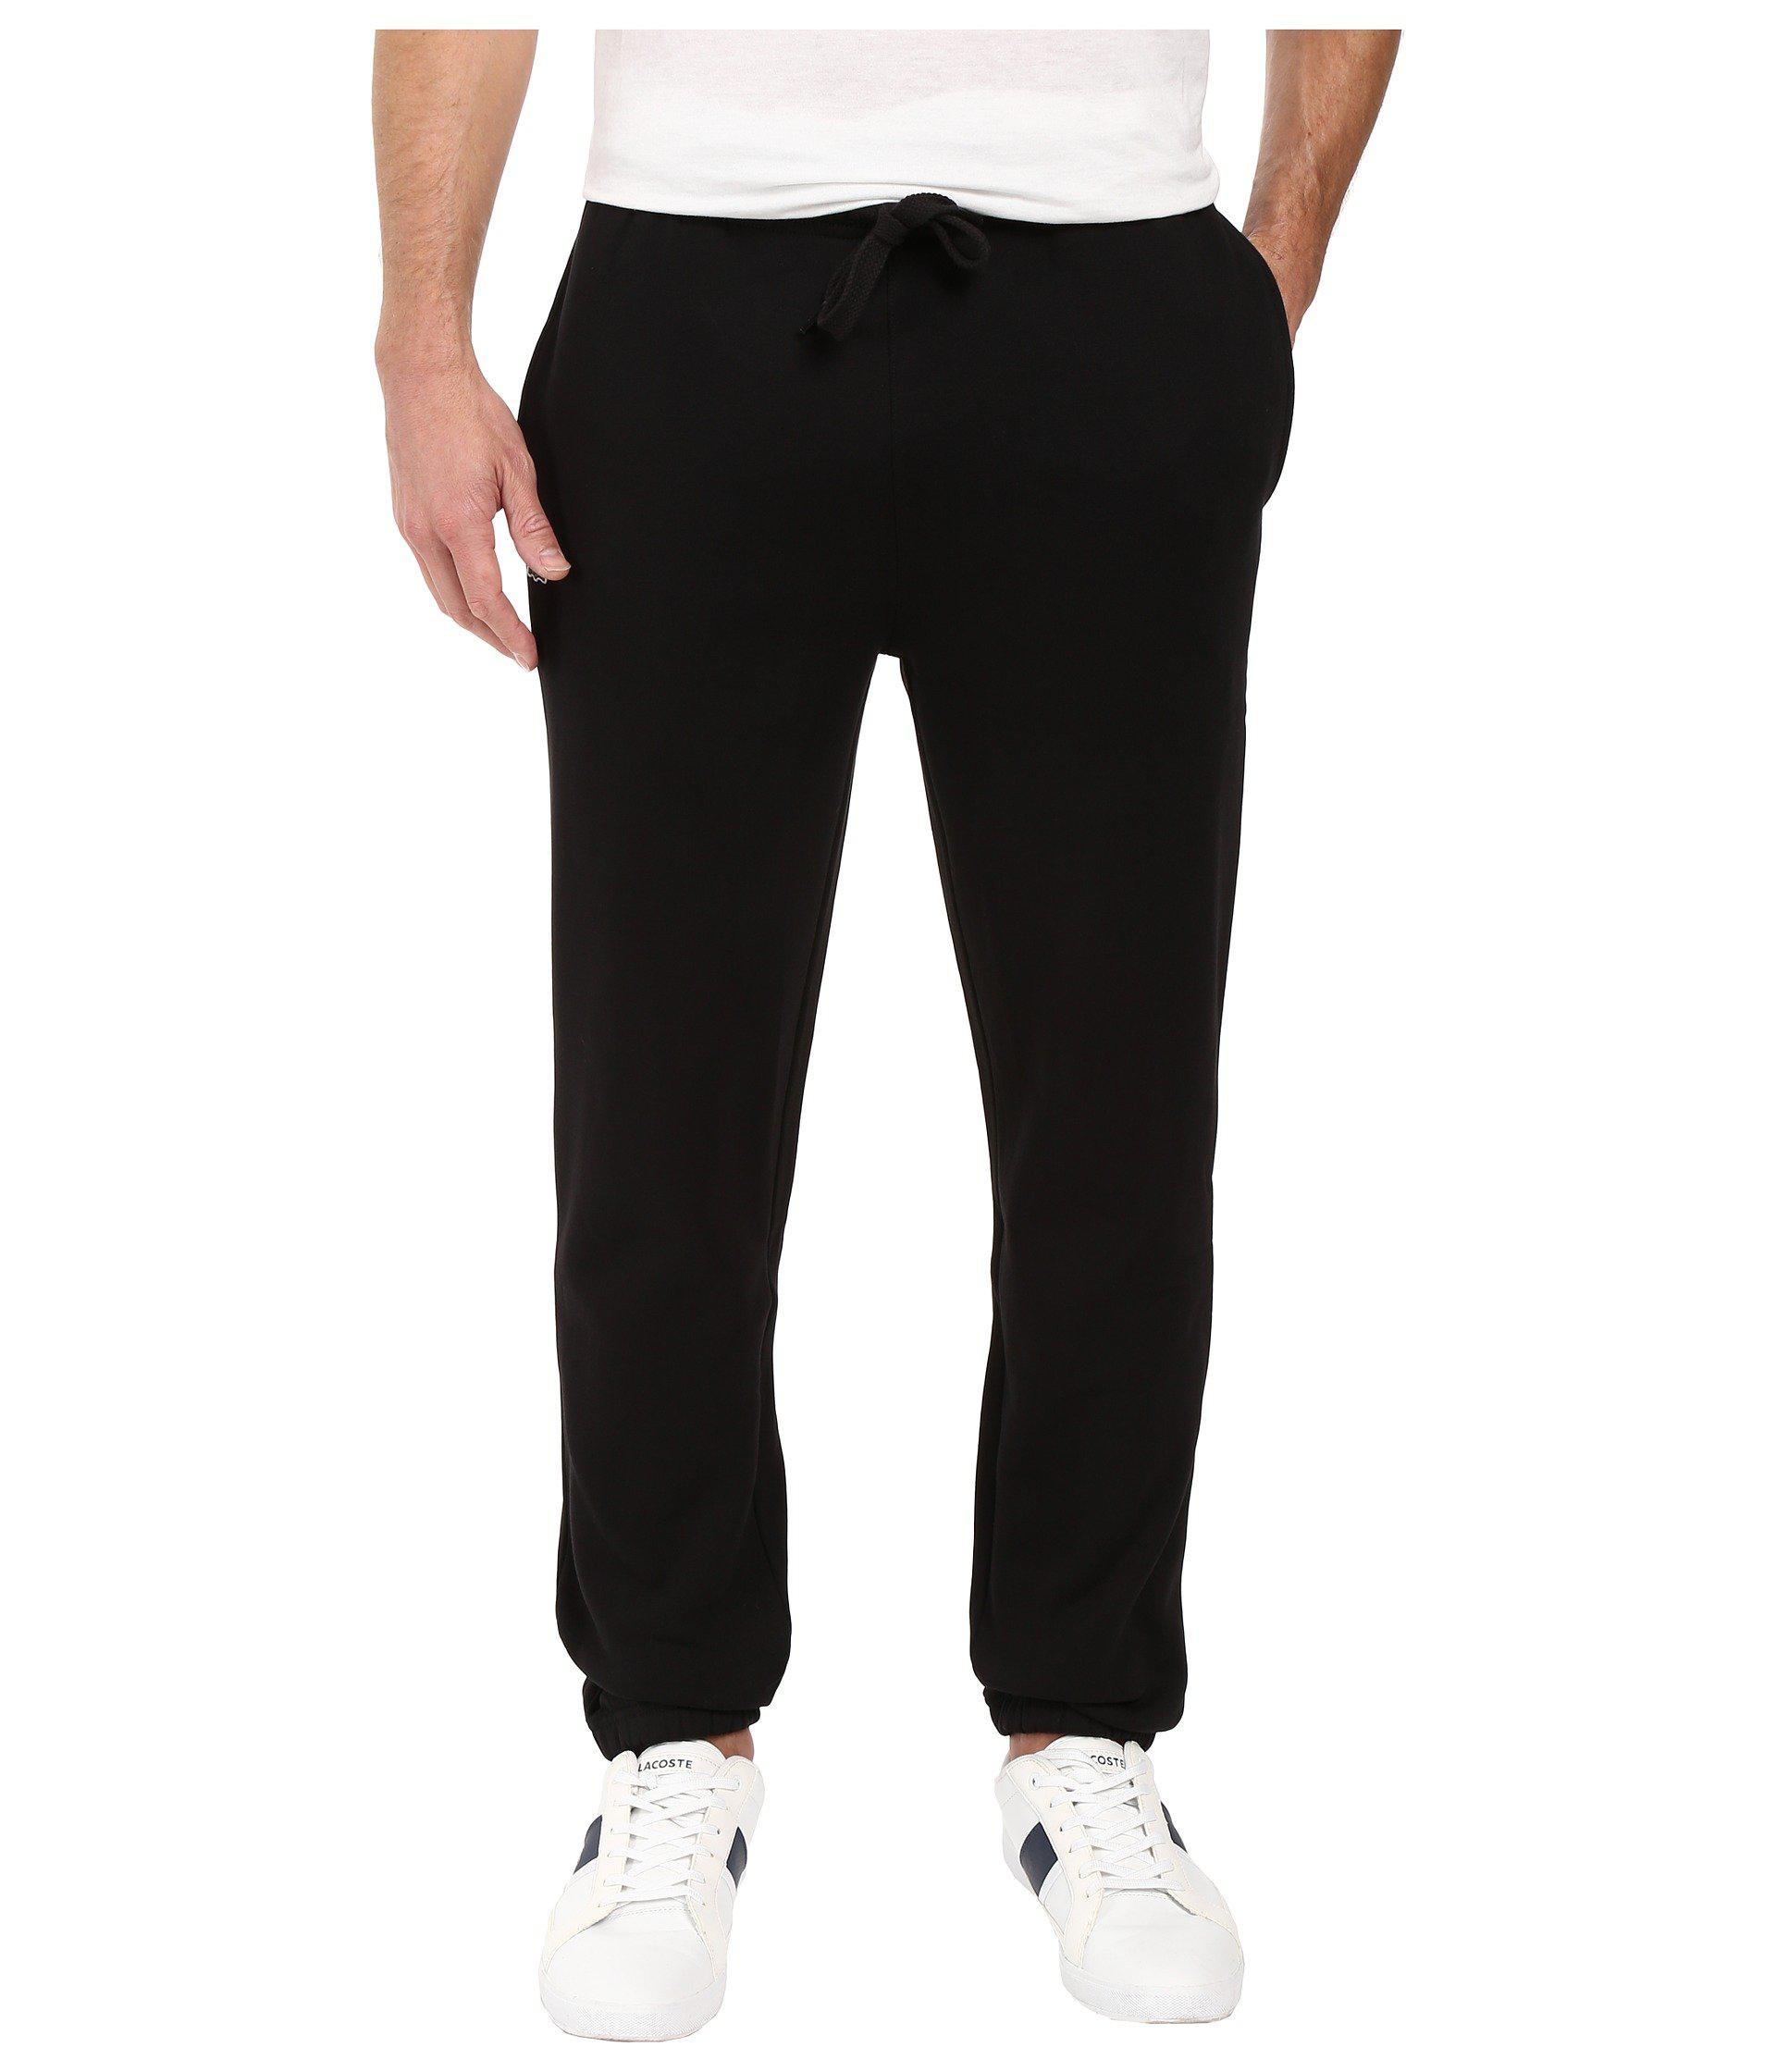 Lacoste Sport Fleece Pants With Elastic Leg Opening in Black for Men - Lyst